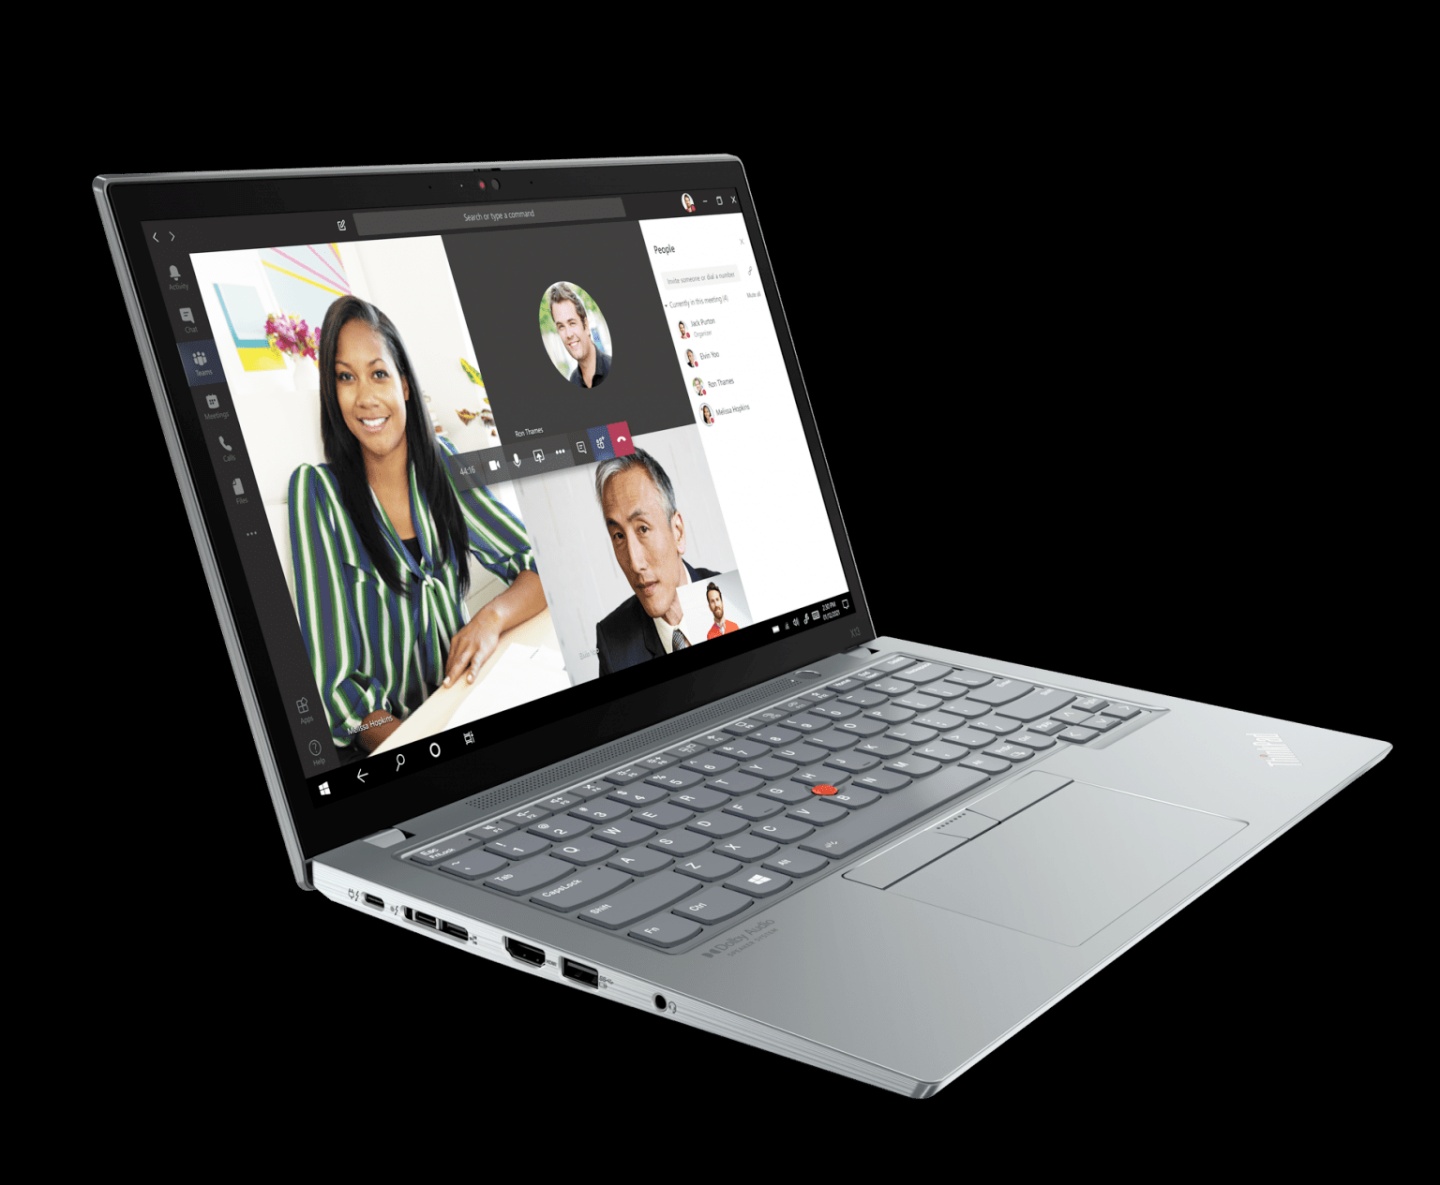 Lenovo ThinkPad X13 系列全新升級！把指紋辨識器整合到電源鍵裡啦